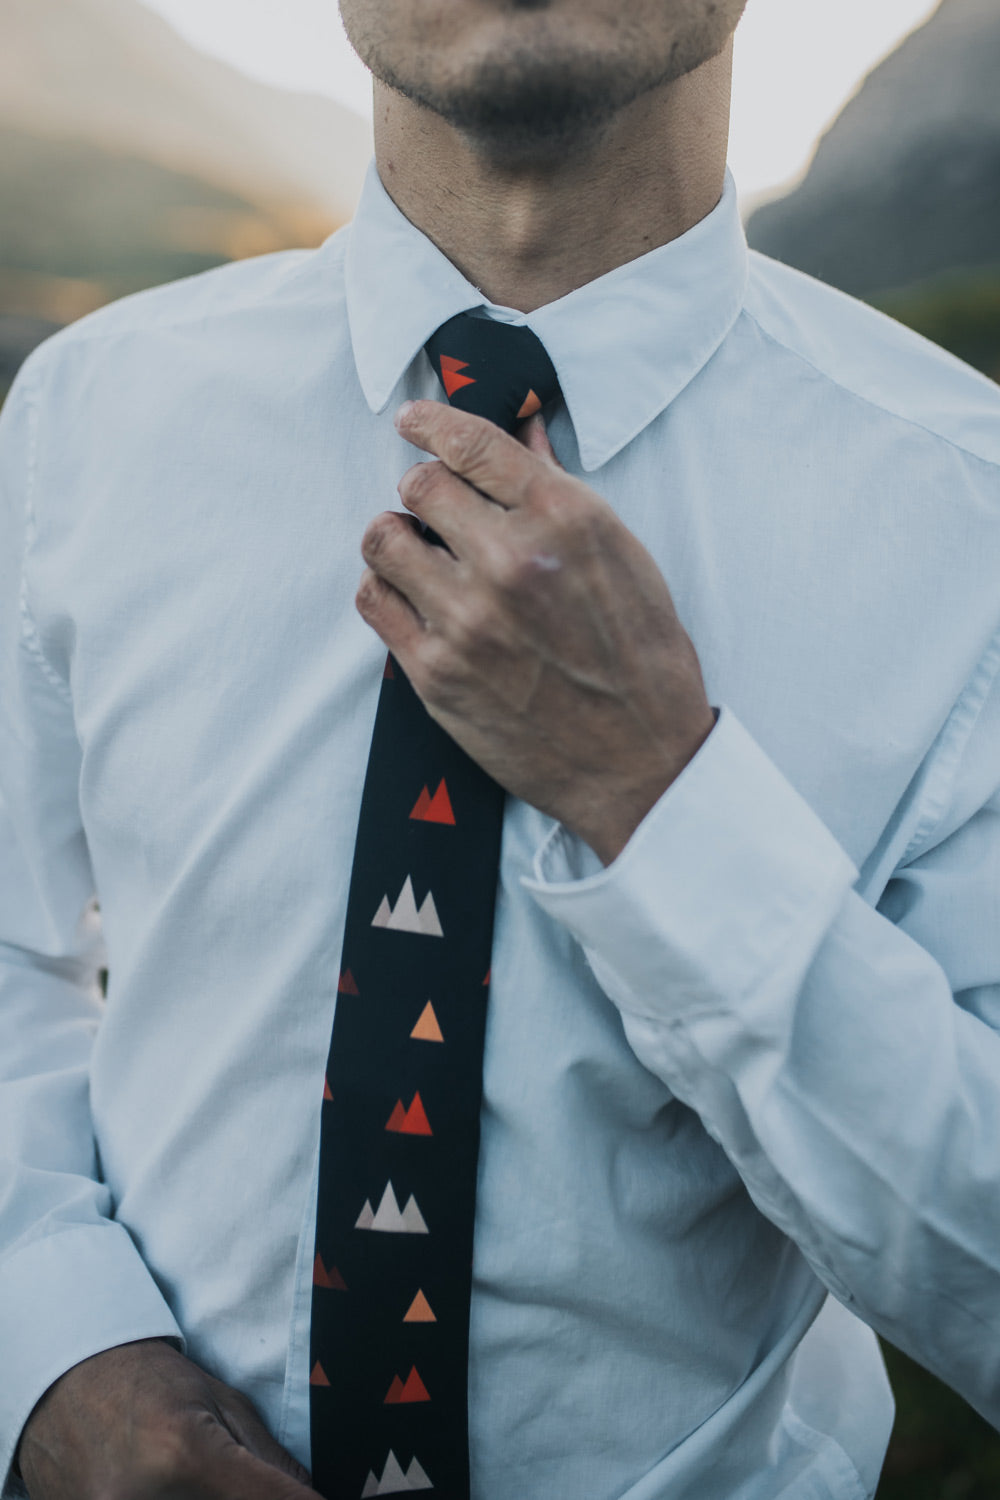 Utah tie worn with a white shirt.